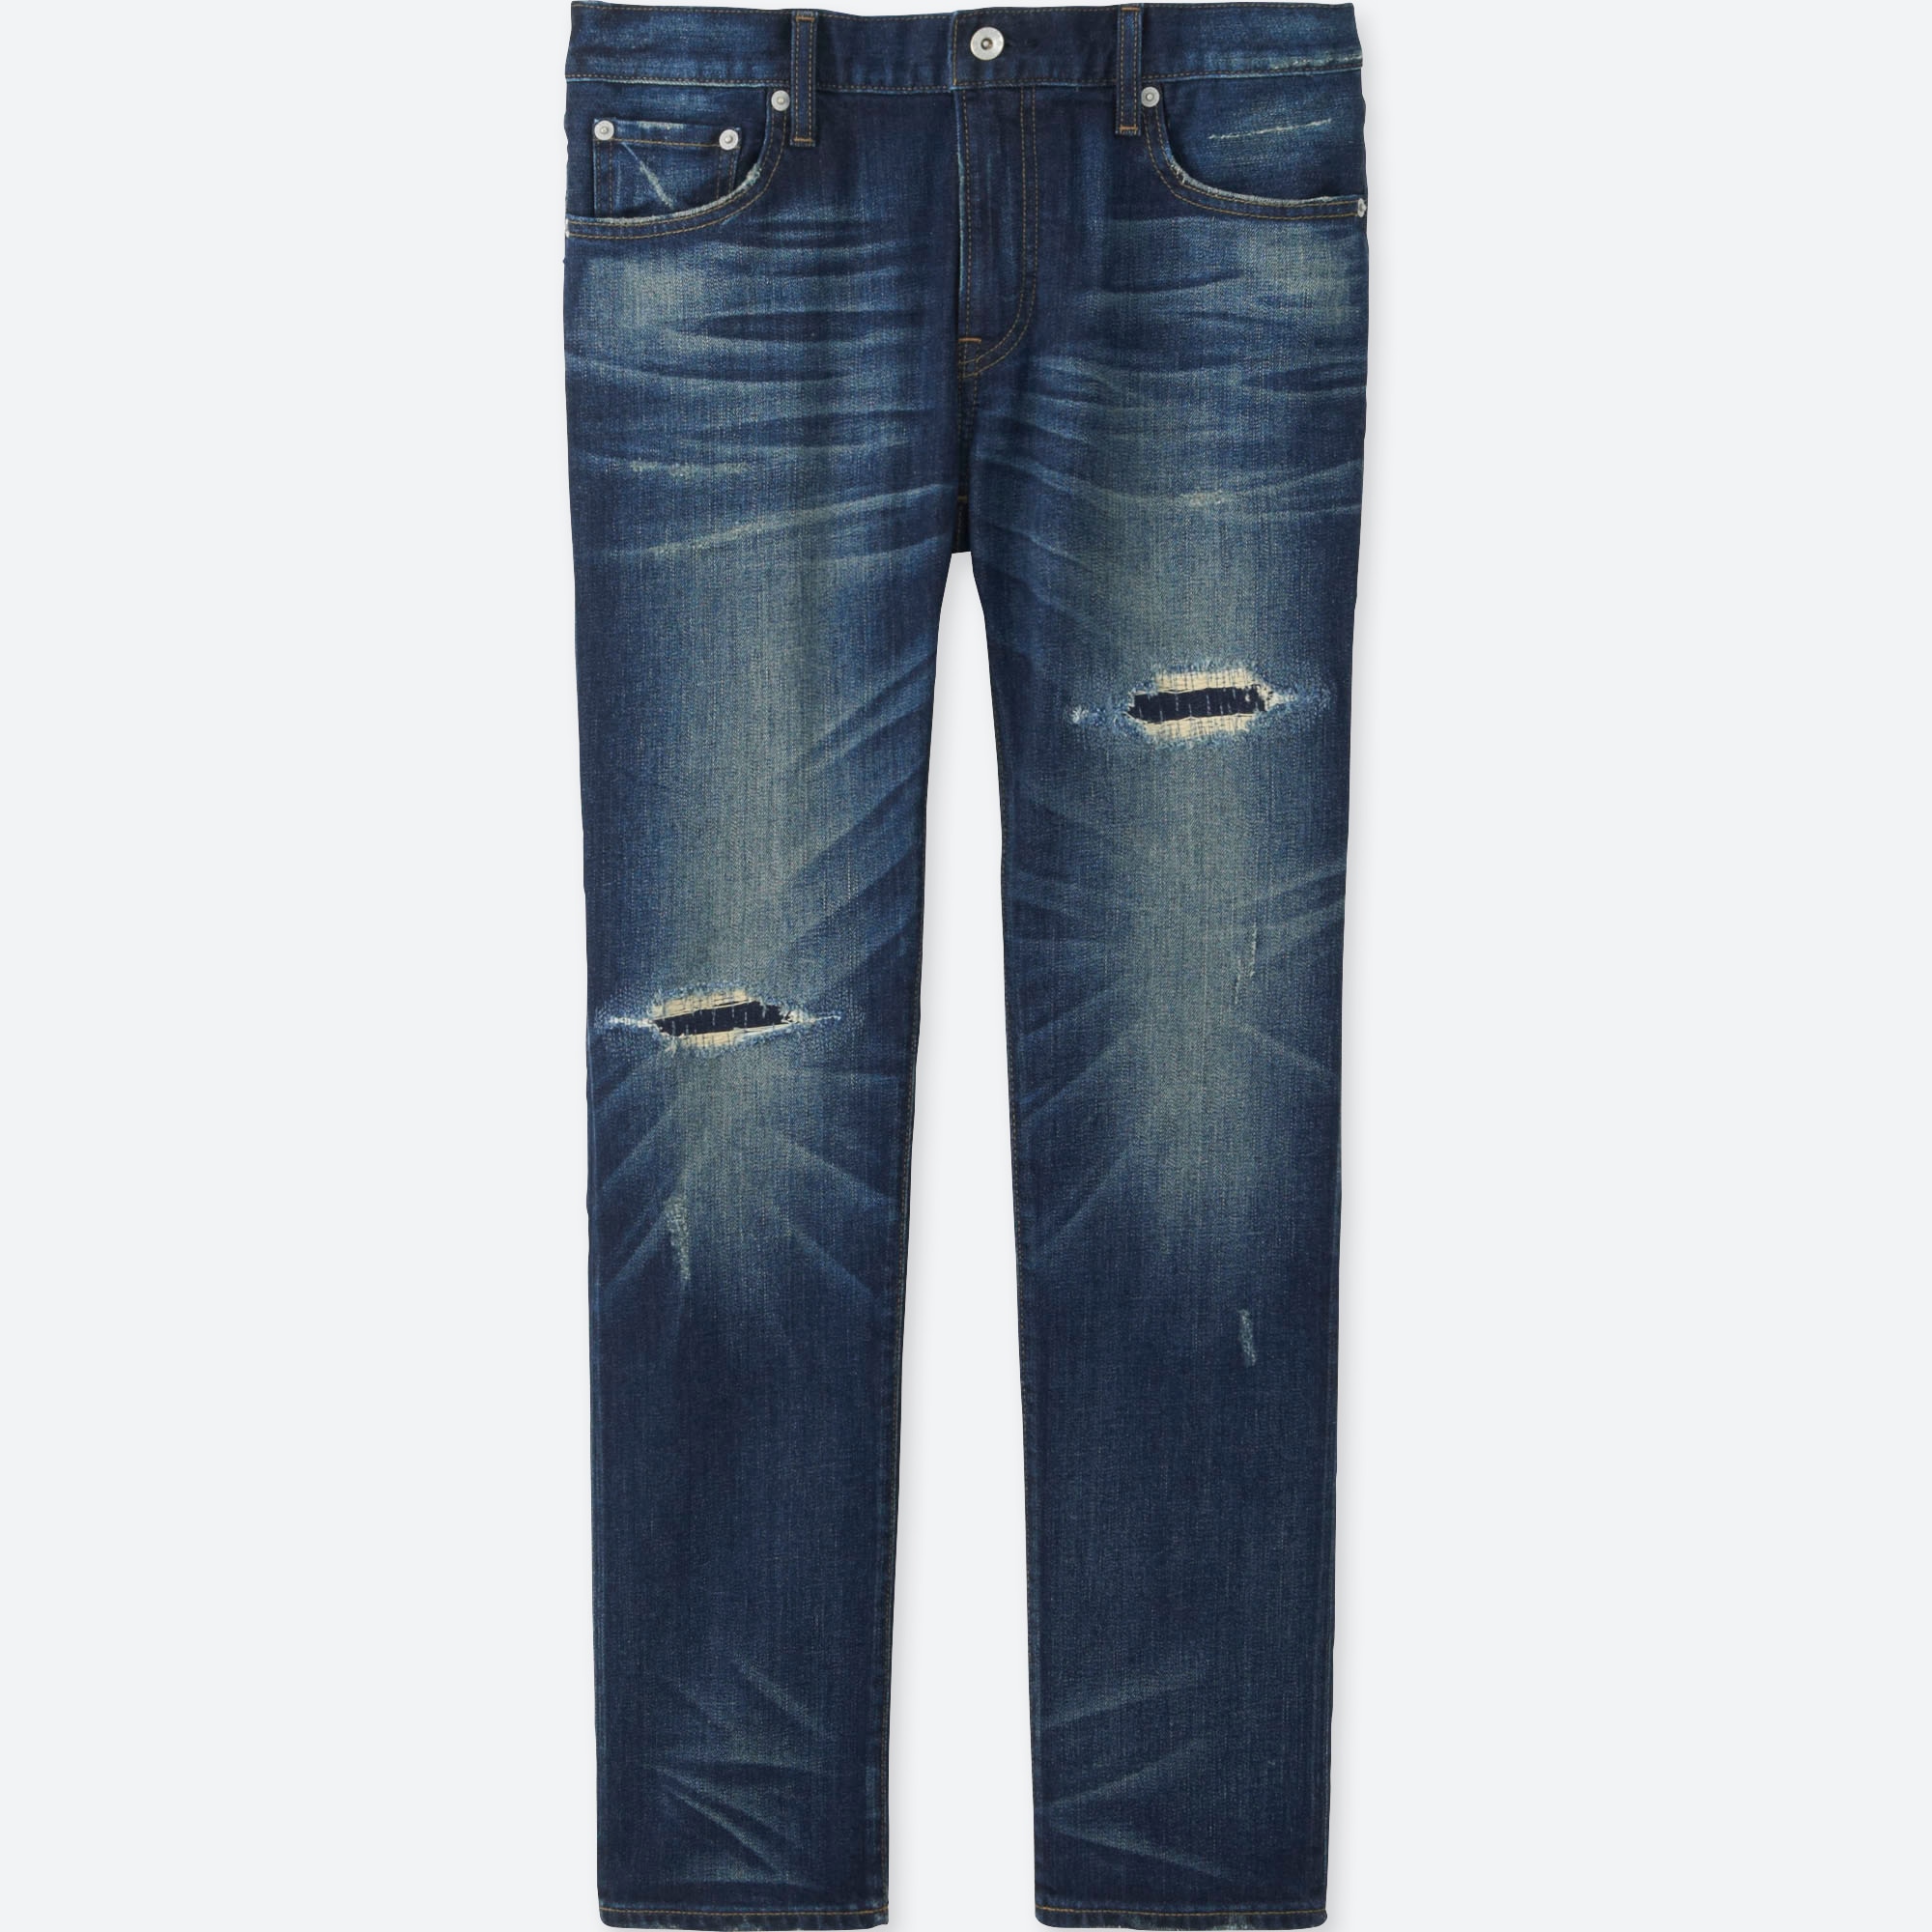 slim distressed jeans